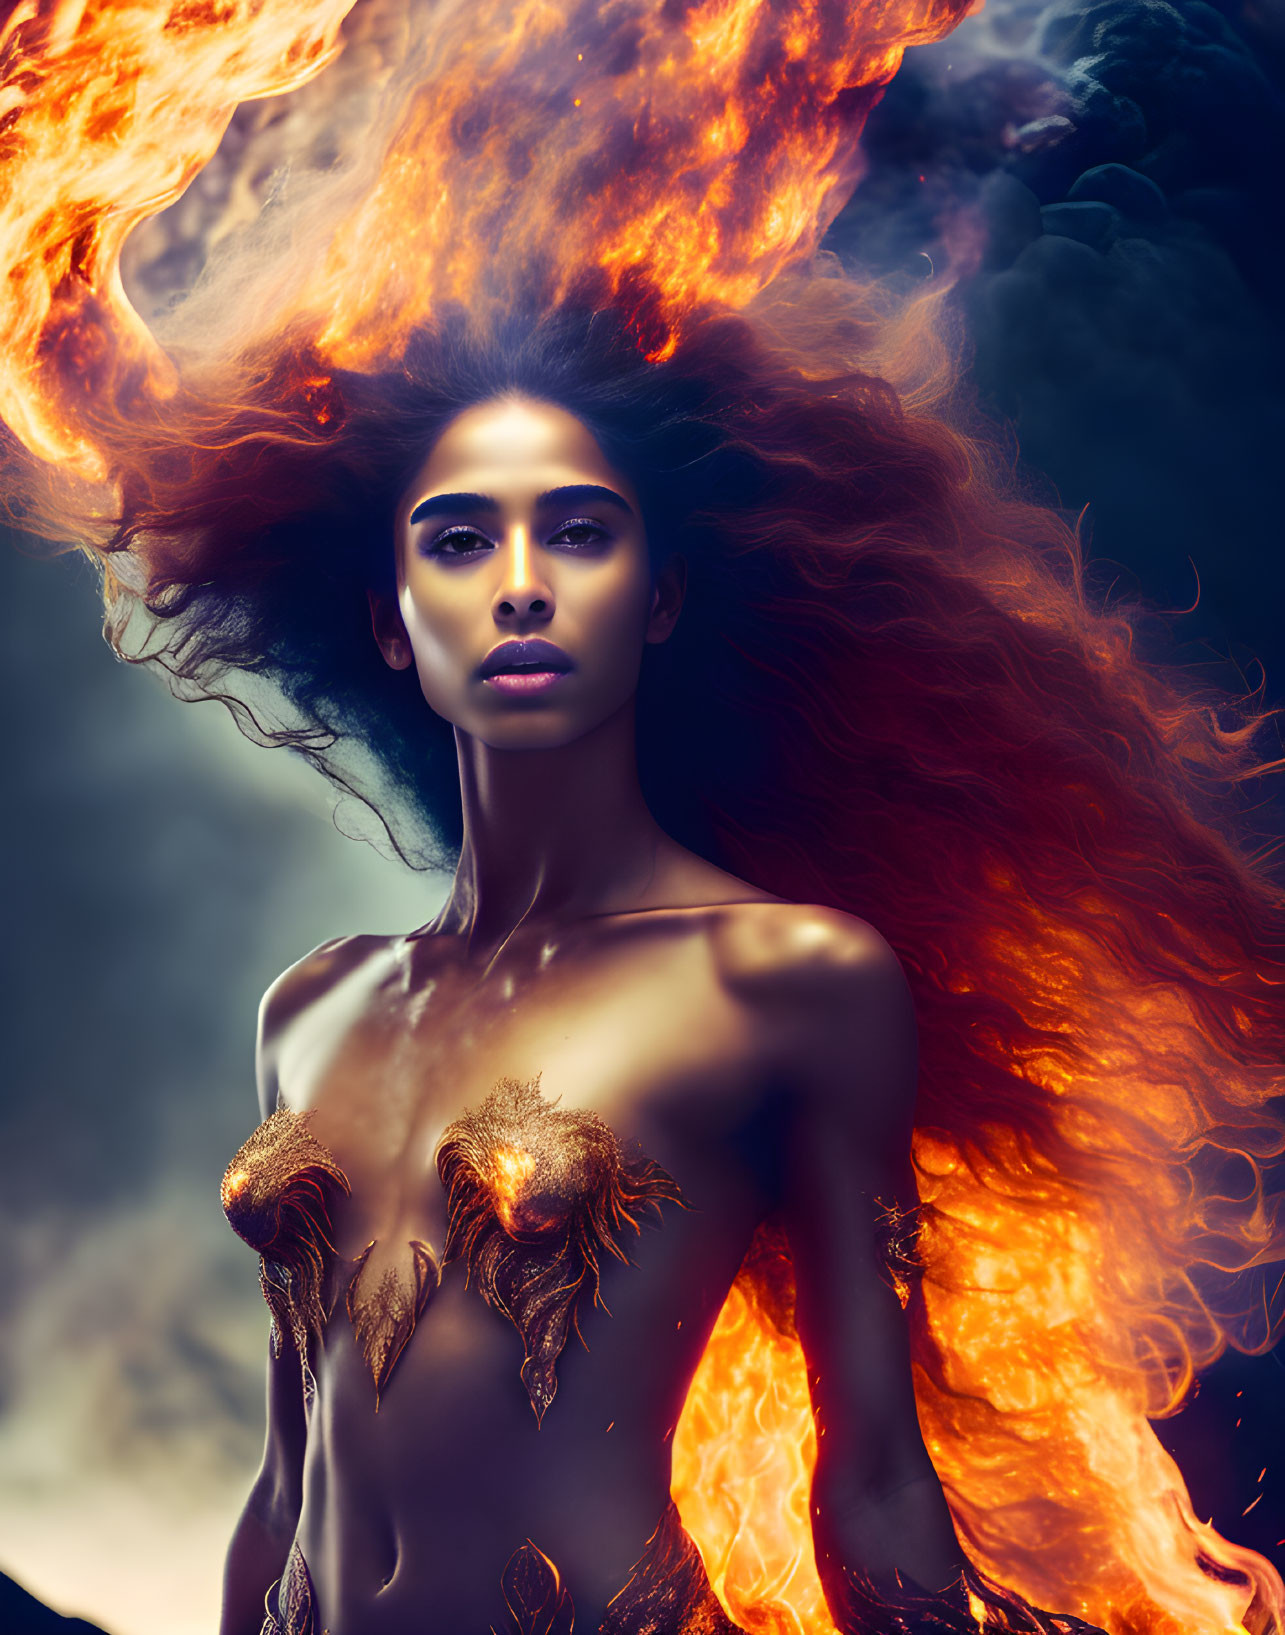 The goddess of flame 